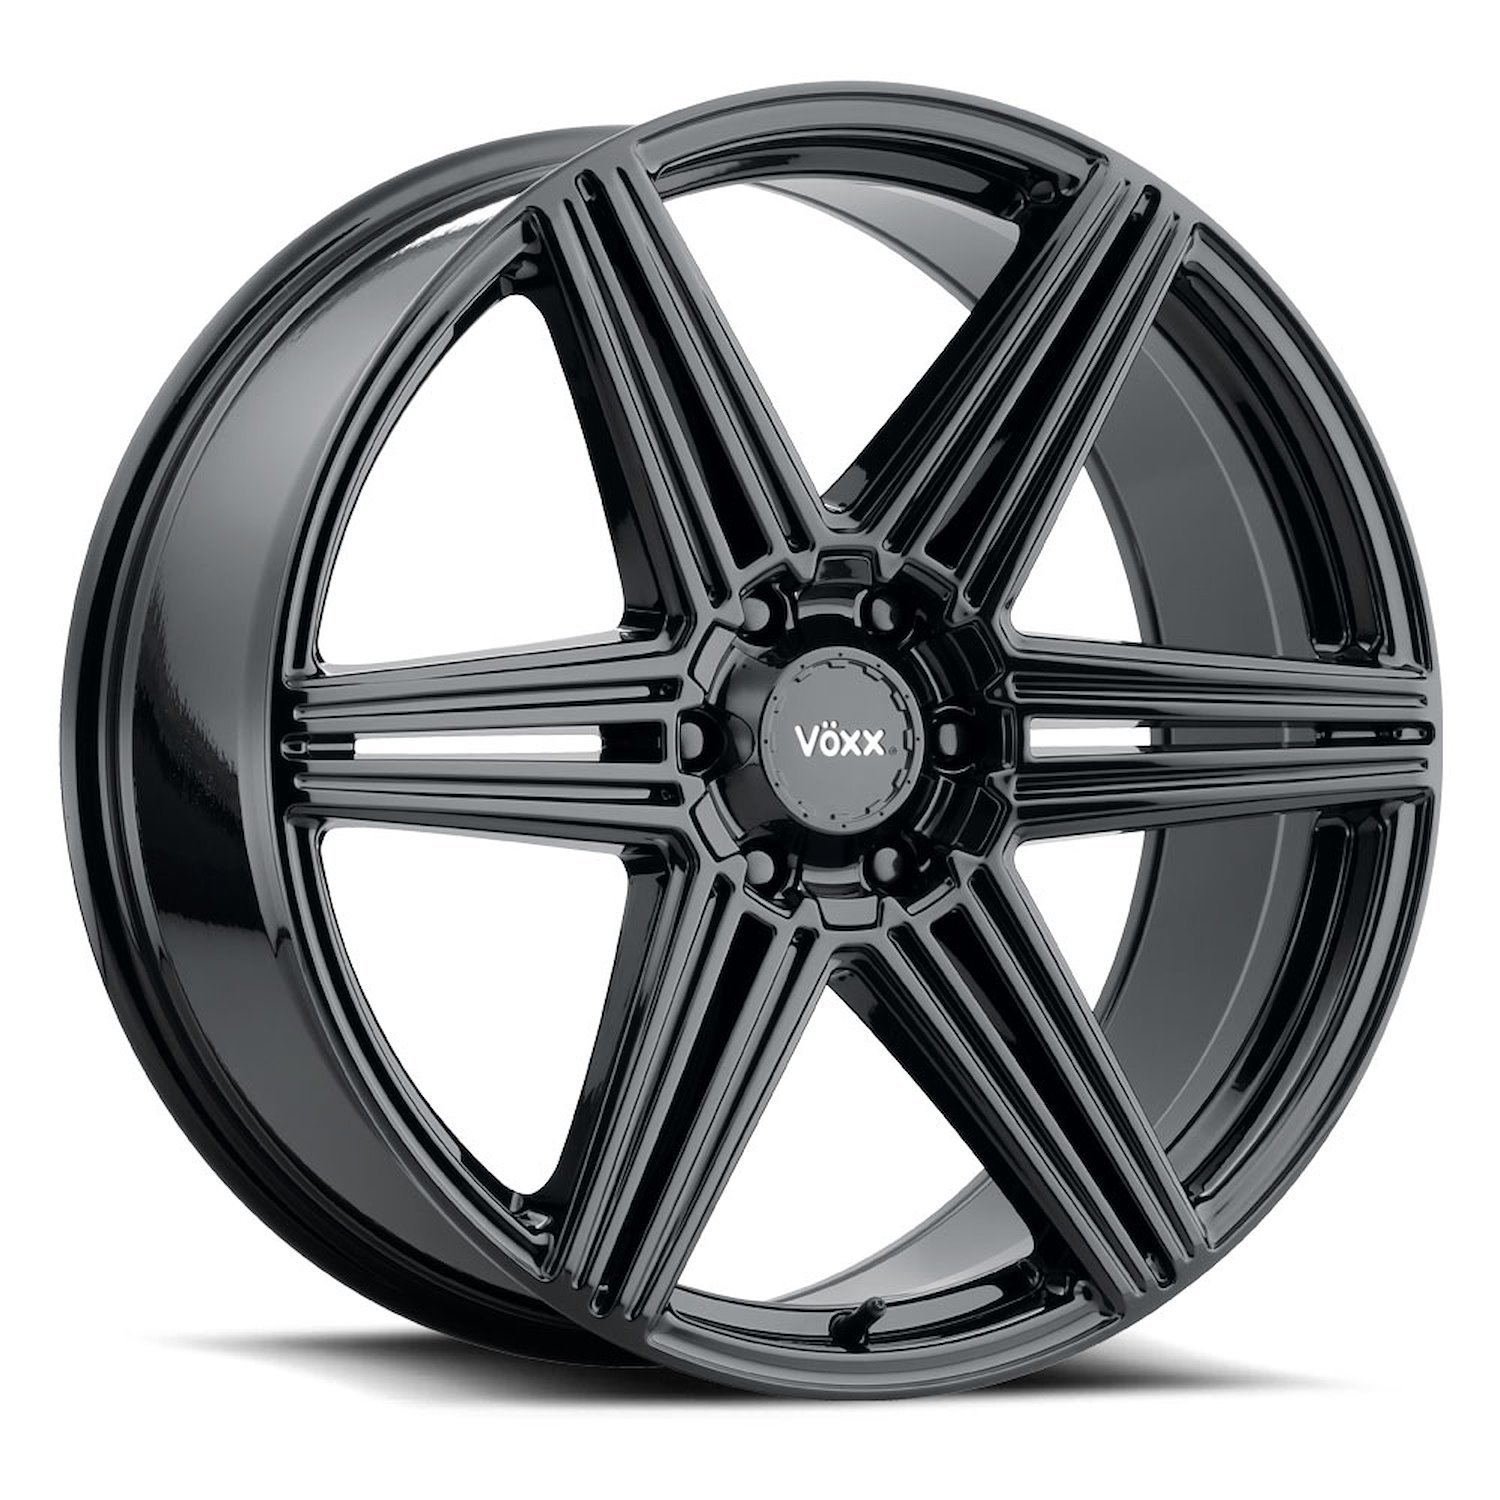 SOT 285-6003-39 GB (2) Sotto Wheel [Size: 20" x 8.50"] Finish: Gloss Black